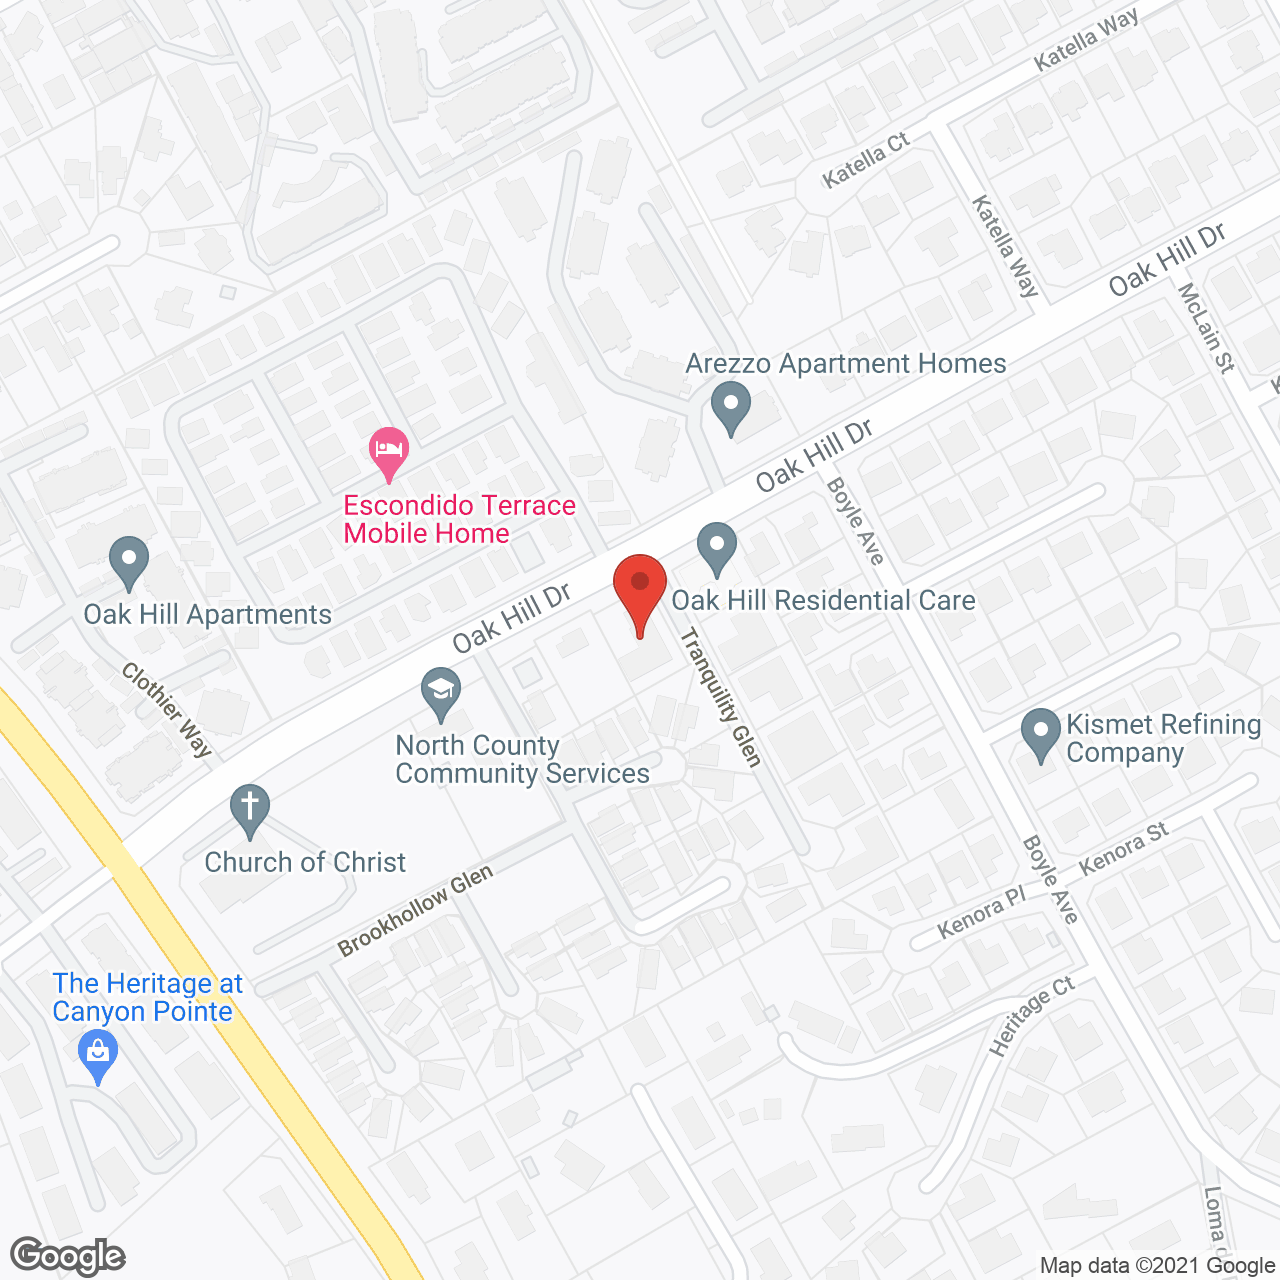 Oak Hill Residential Care in google map